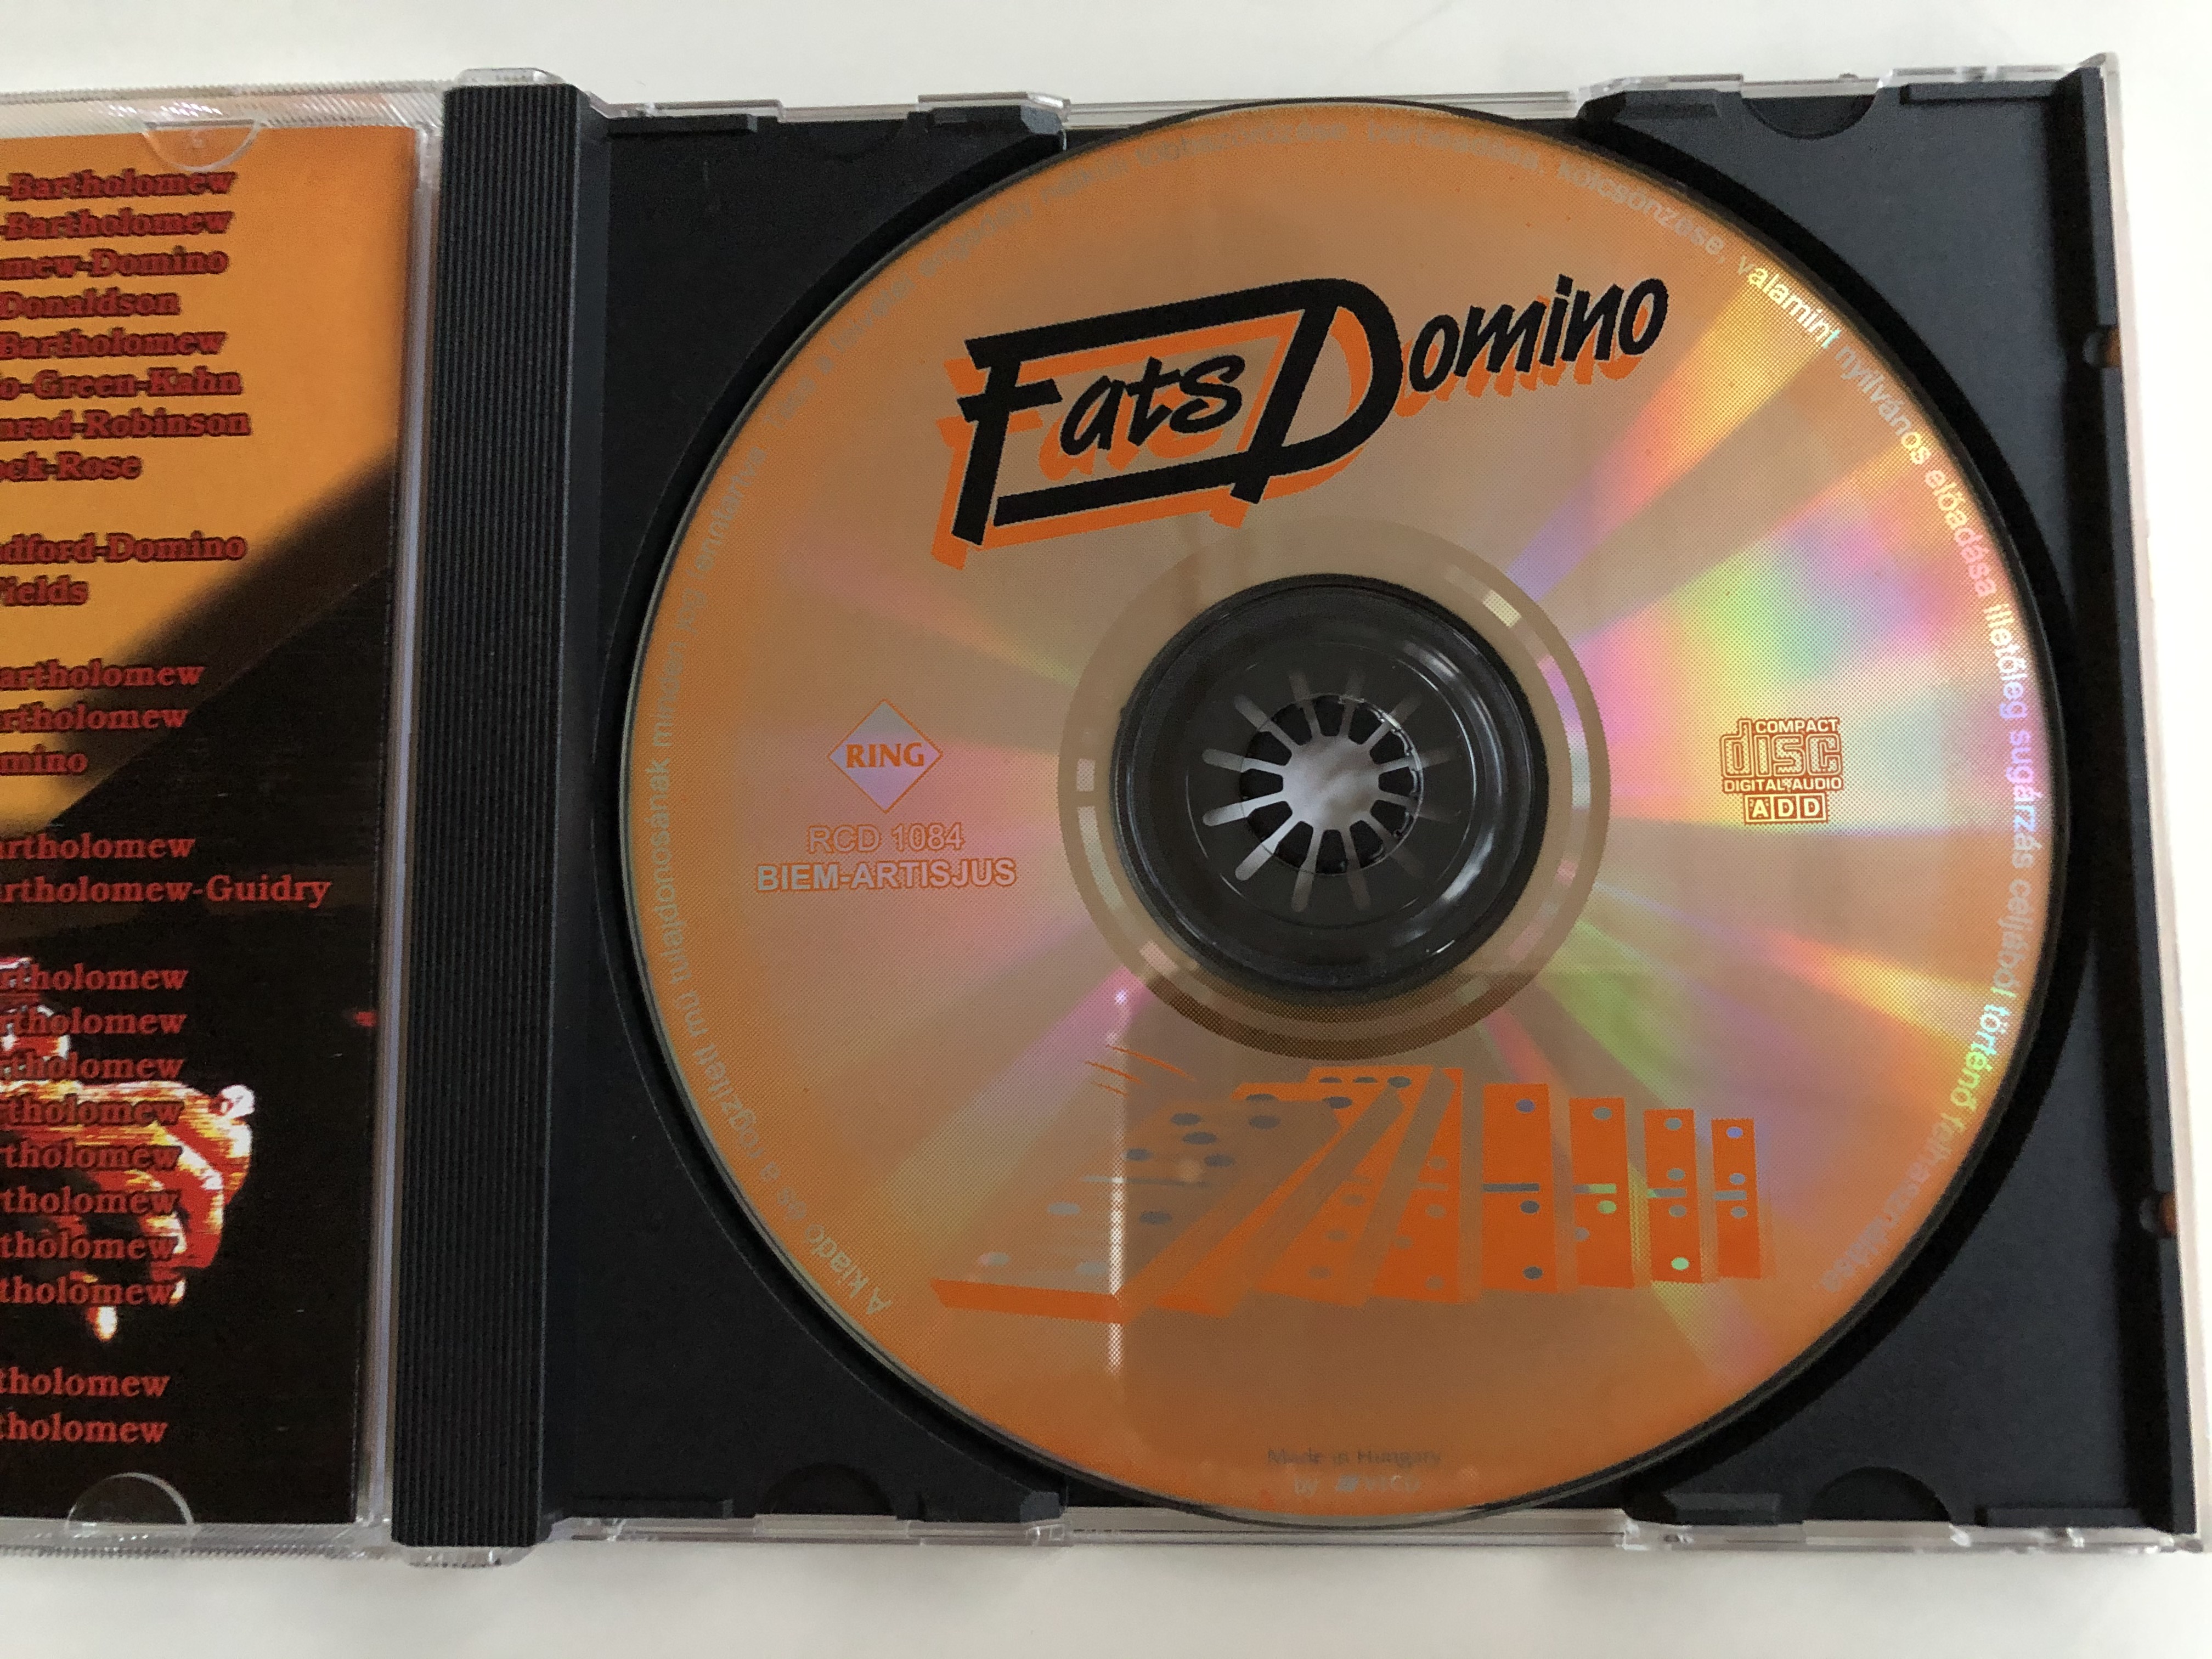 fats-domino-greatest-hits-ring-audio-cd-rcd-1084-3-.jpg